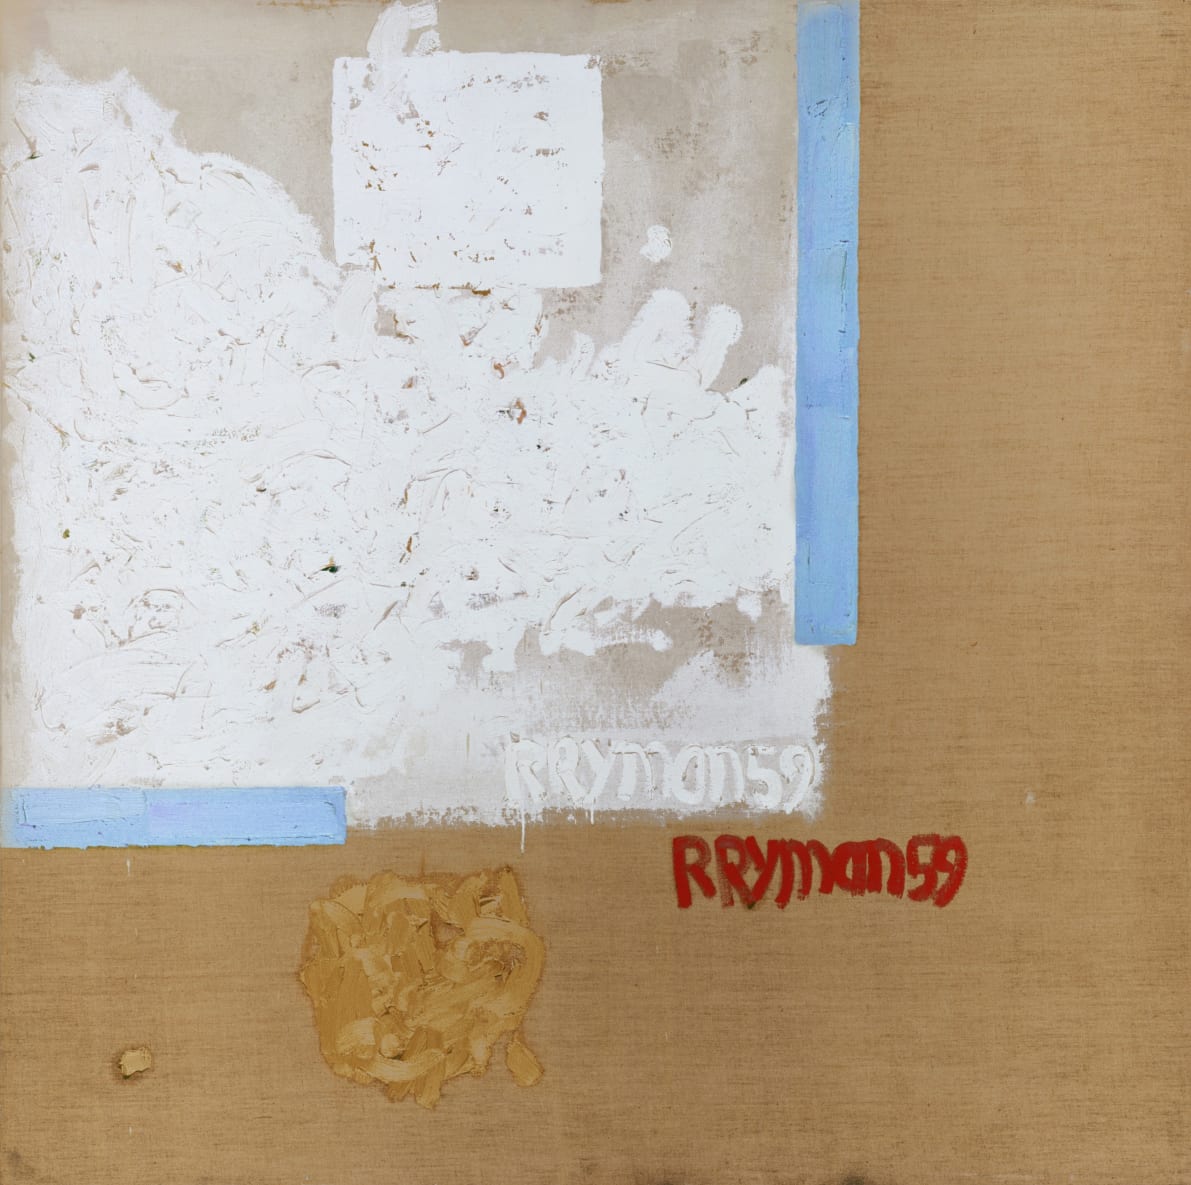 Robert Ryman's sophisticated perspective | Art Basel